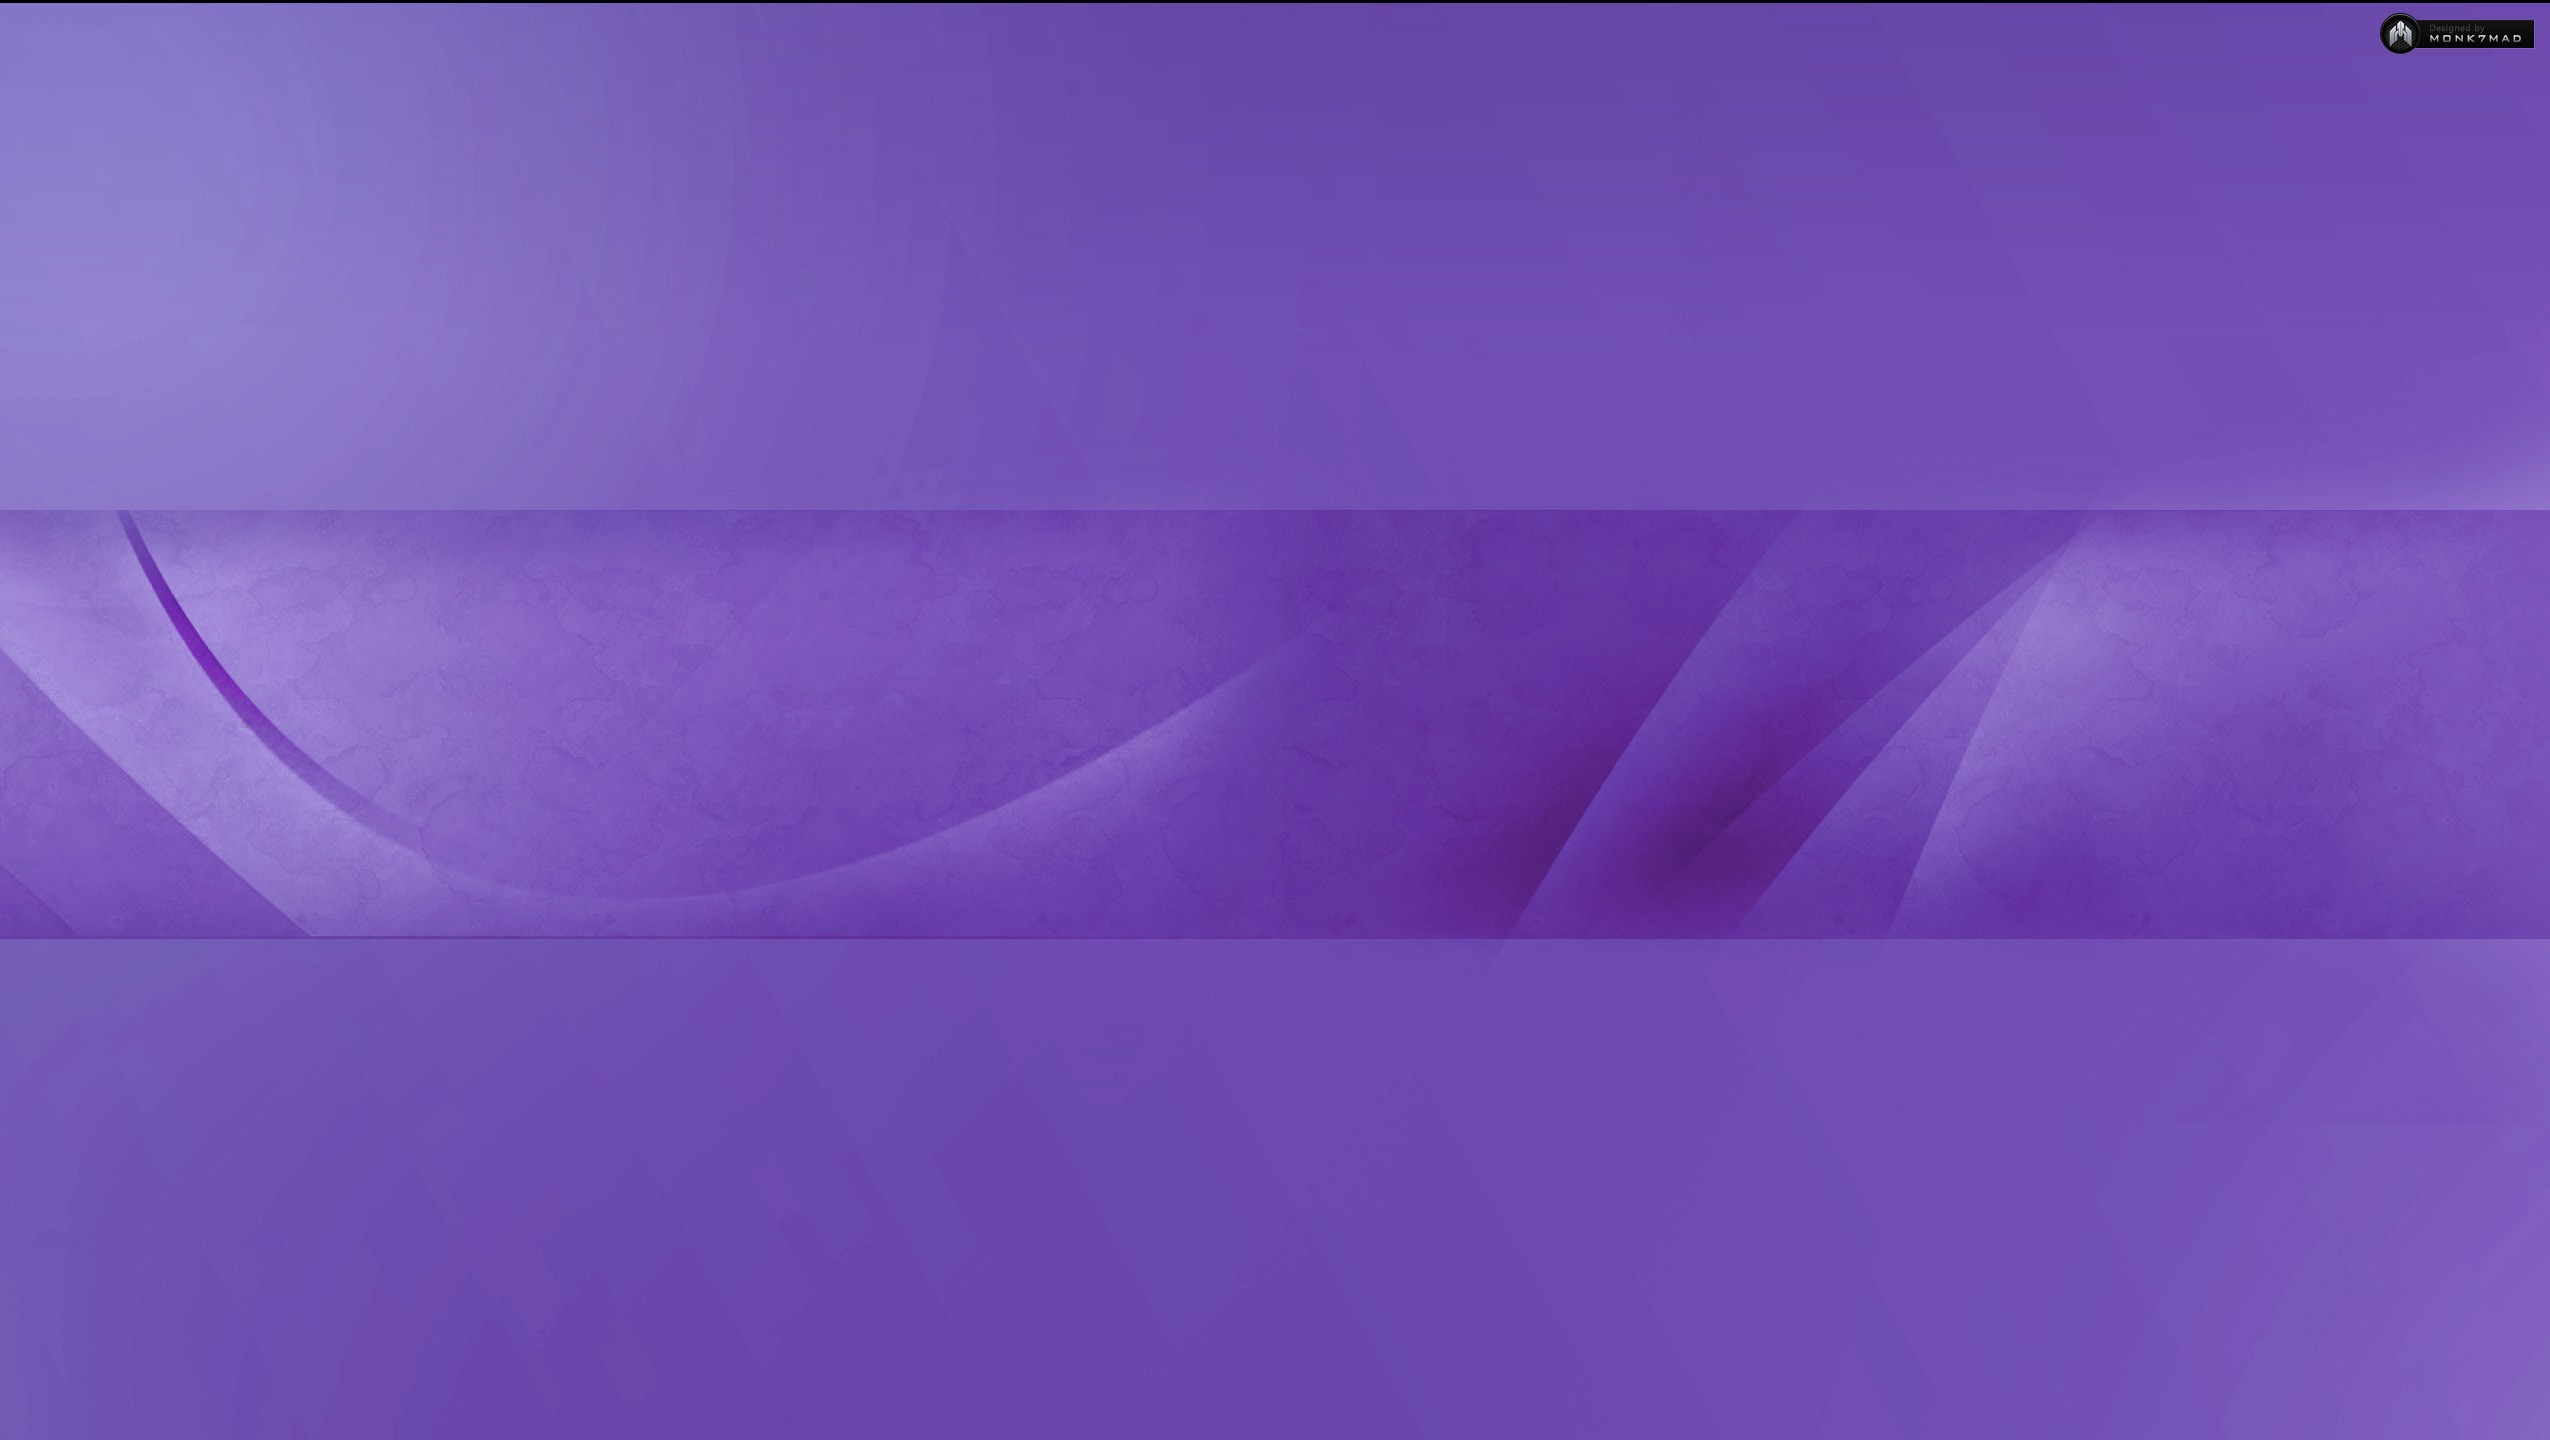 General 2550x1440 minimalism simple background purple background texture